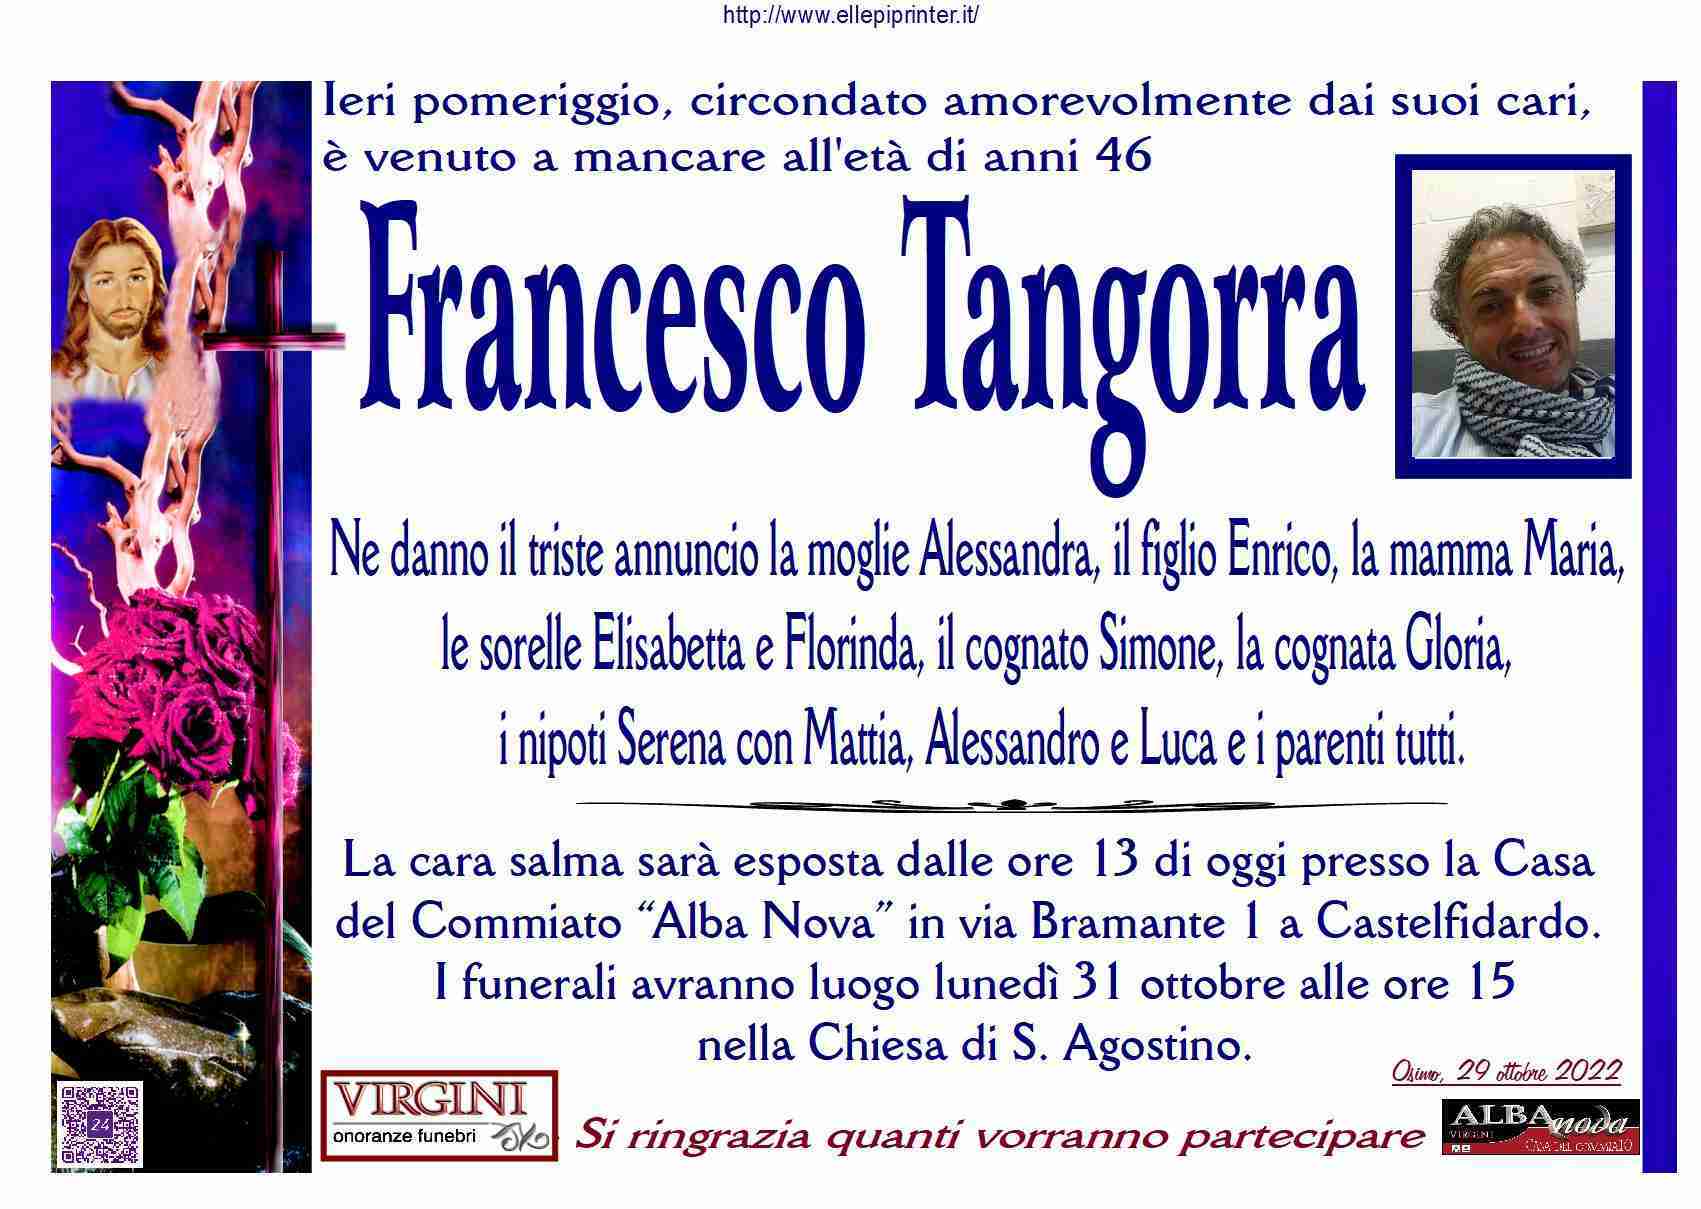 Francesco Tangorra